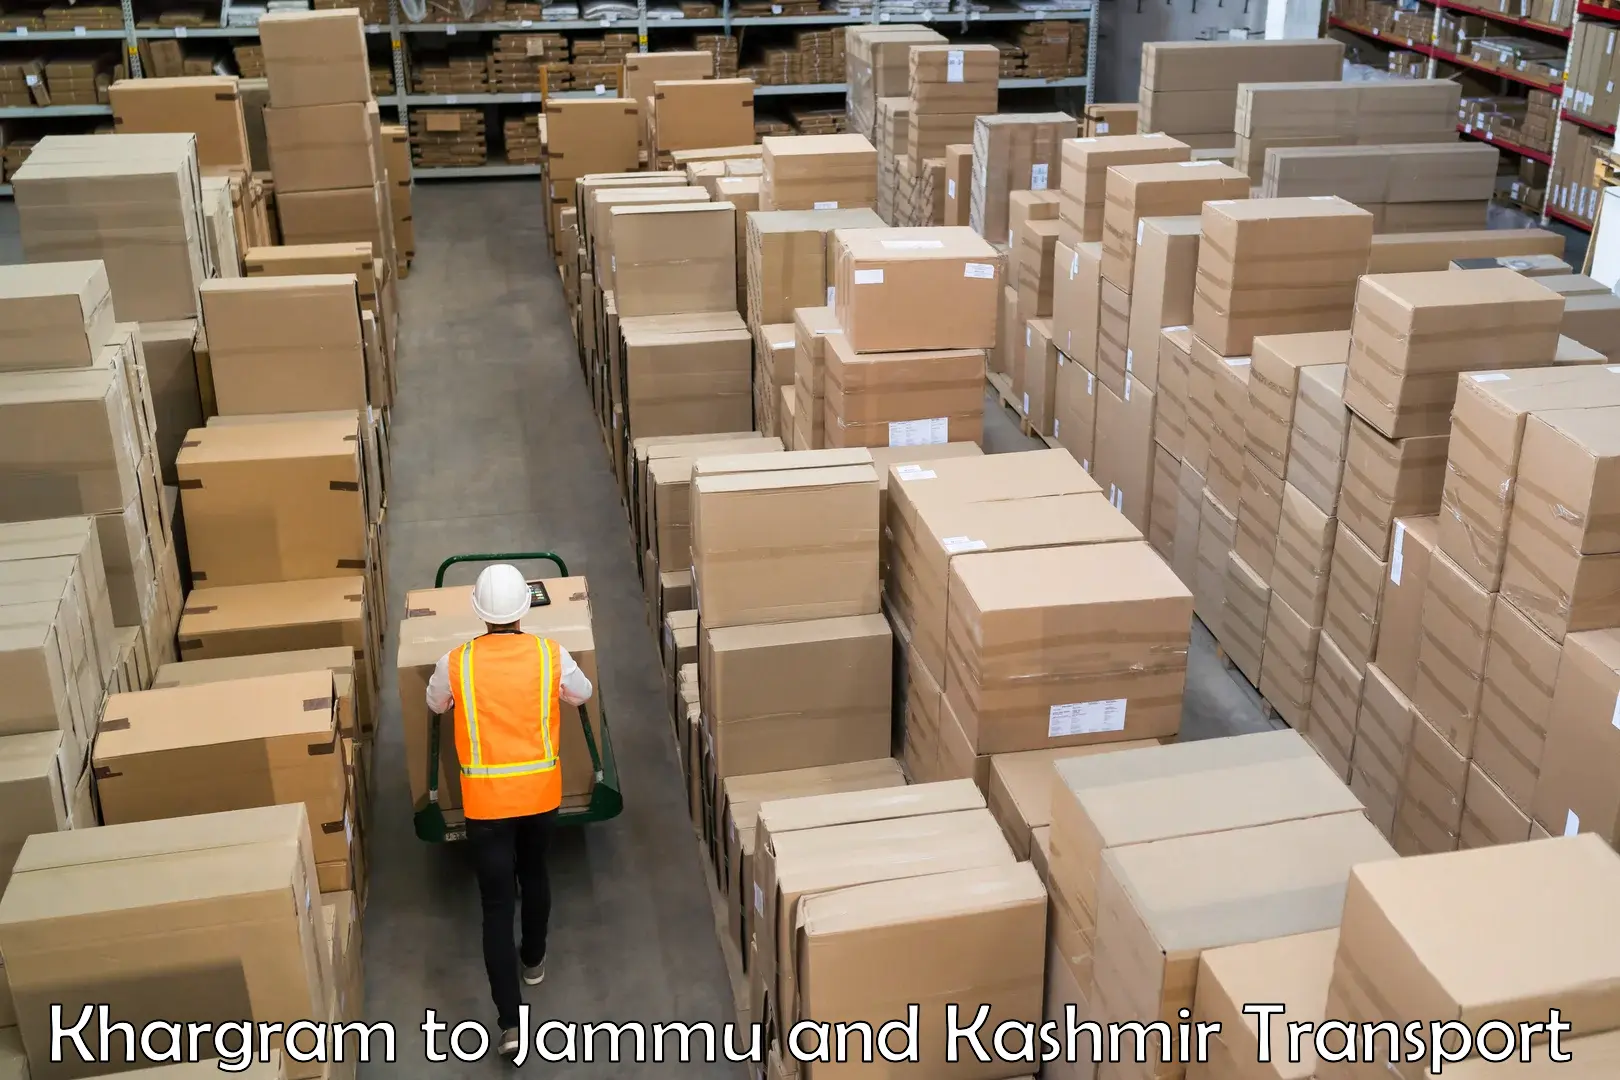 Delivery service Khargram to Kishtwar